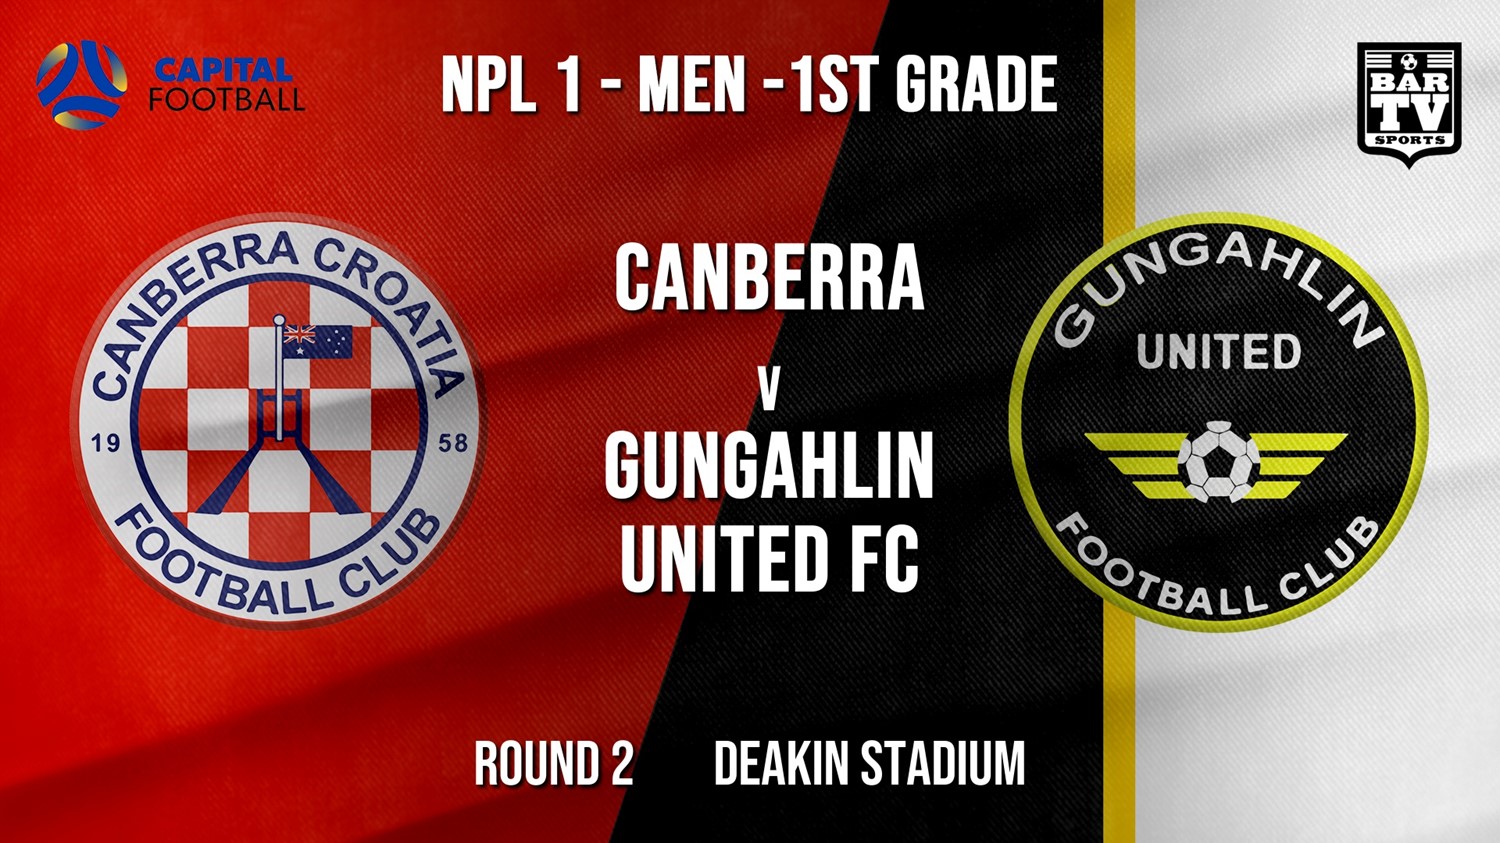 NPL1 Men - 1st Grade - Capital Football Round 2 - Canberra FC v Gungahlin United FC Minigame Slate Image